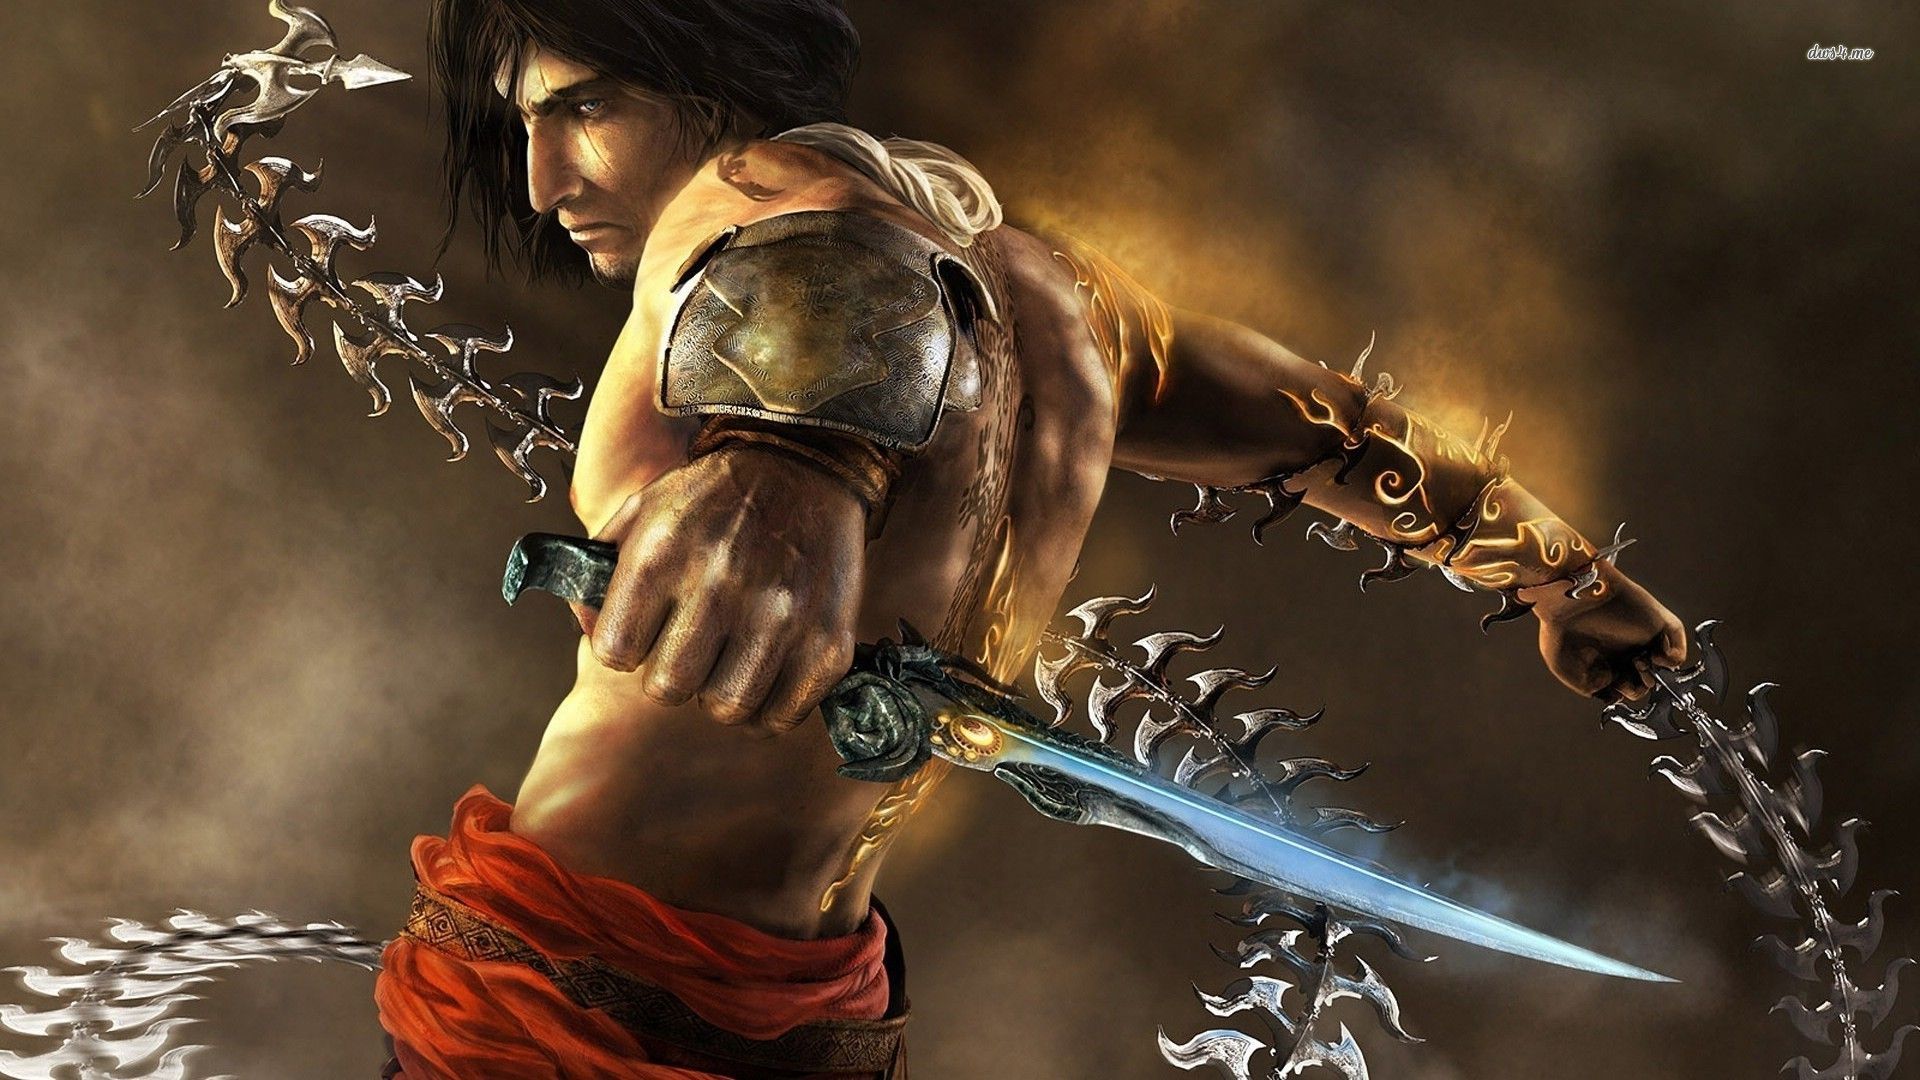 Download Free Prince of Persia wallpaper | HD Wallpapers & Desktop ...